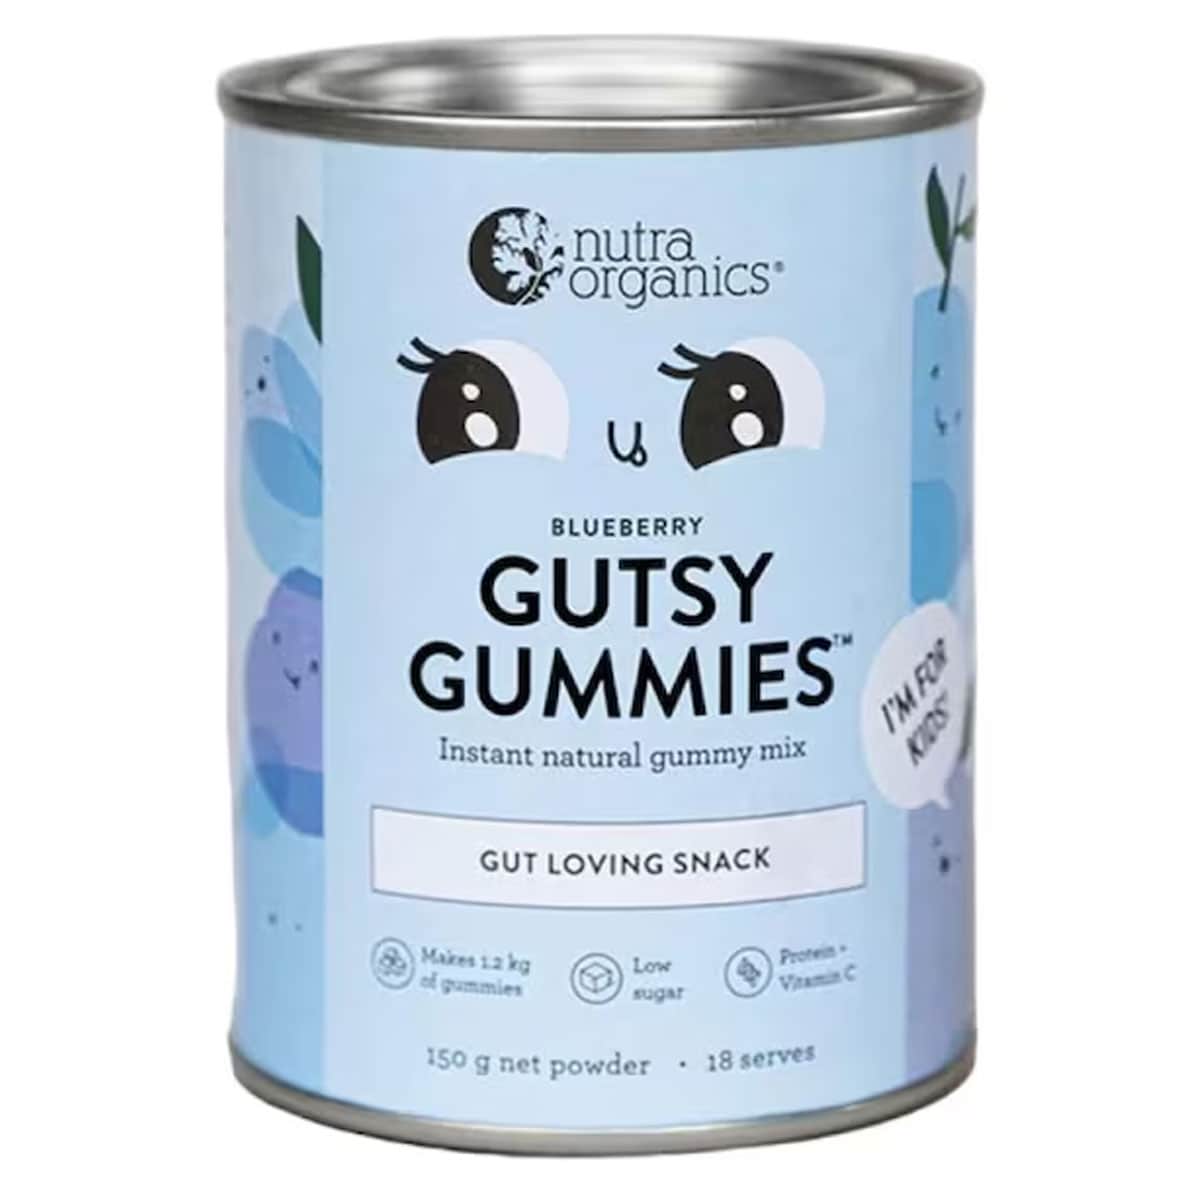 Nutra Organics Gutsy Gummies Blueberry 150g